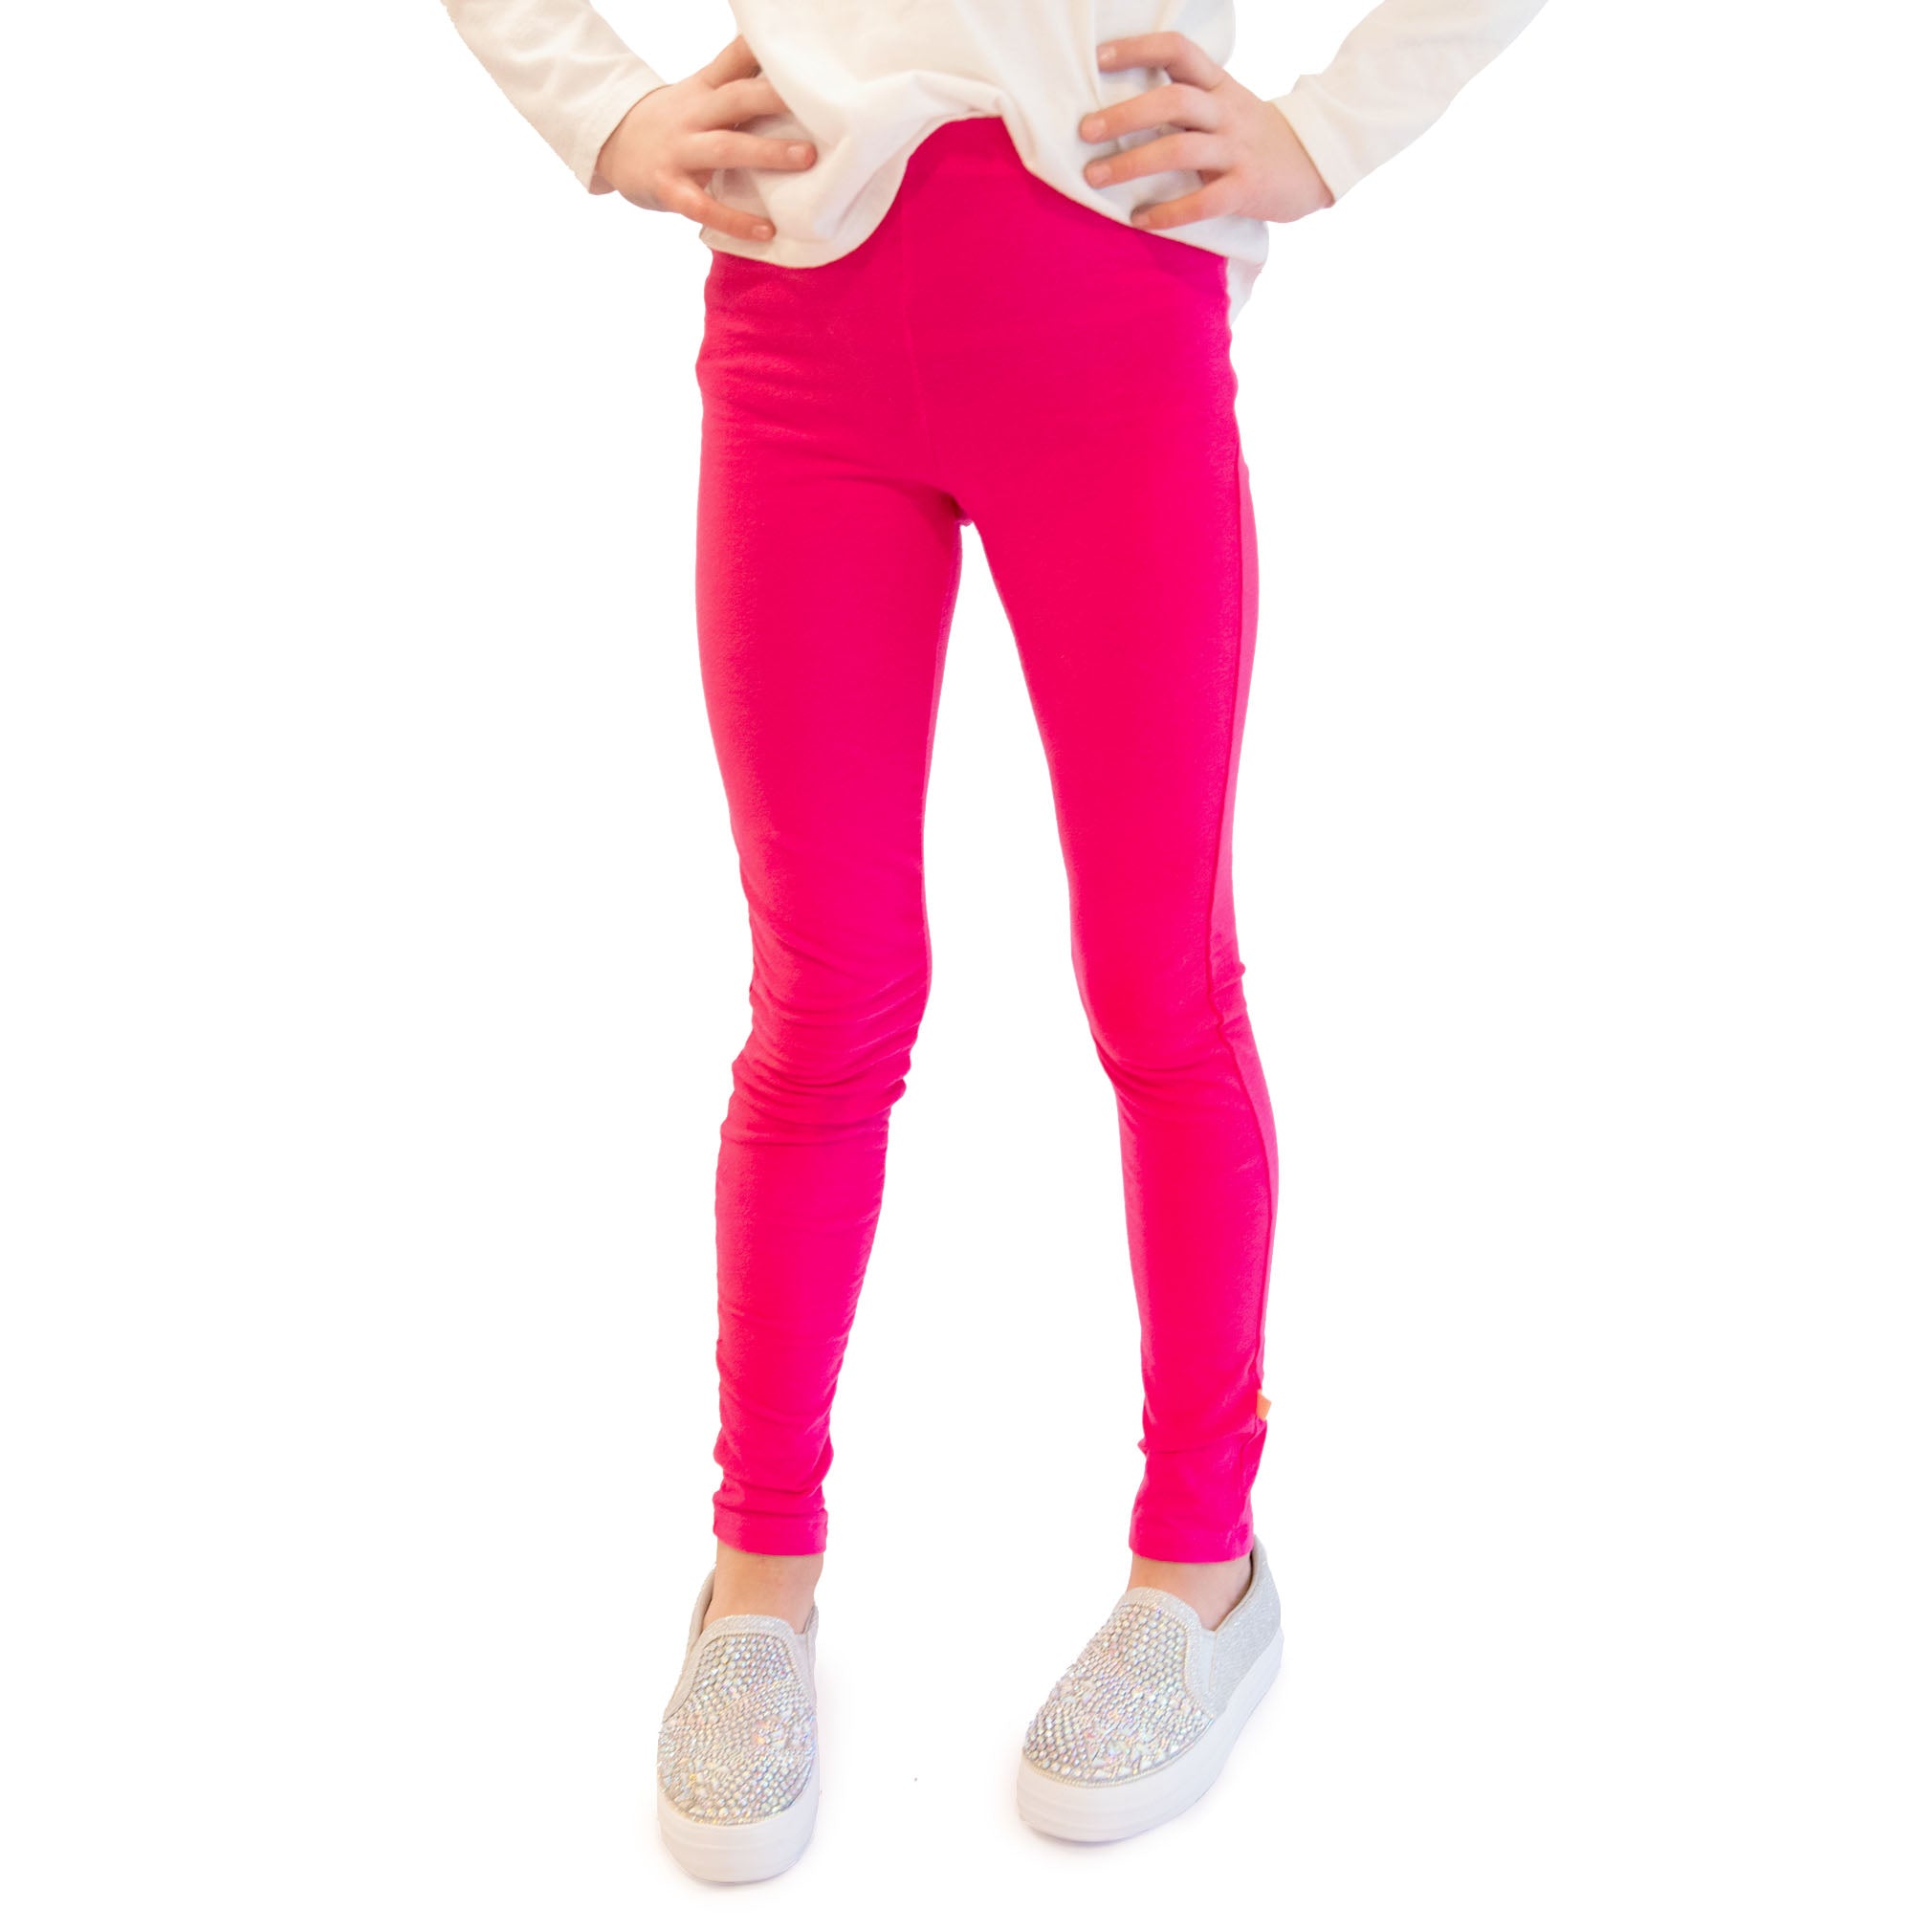  STARCOVE Ladybug Print Girls Leggings (8-20), Pink